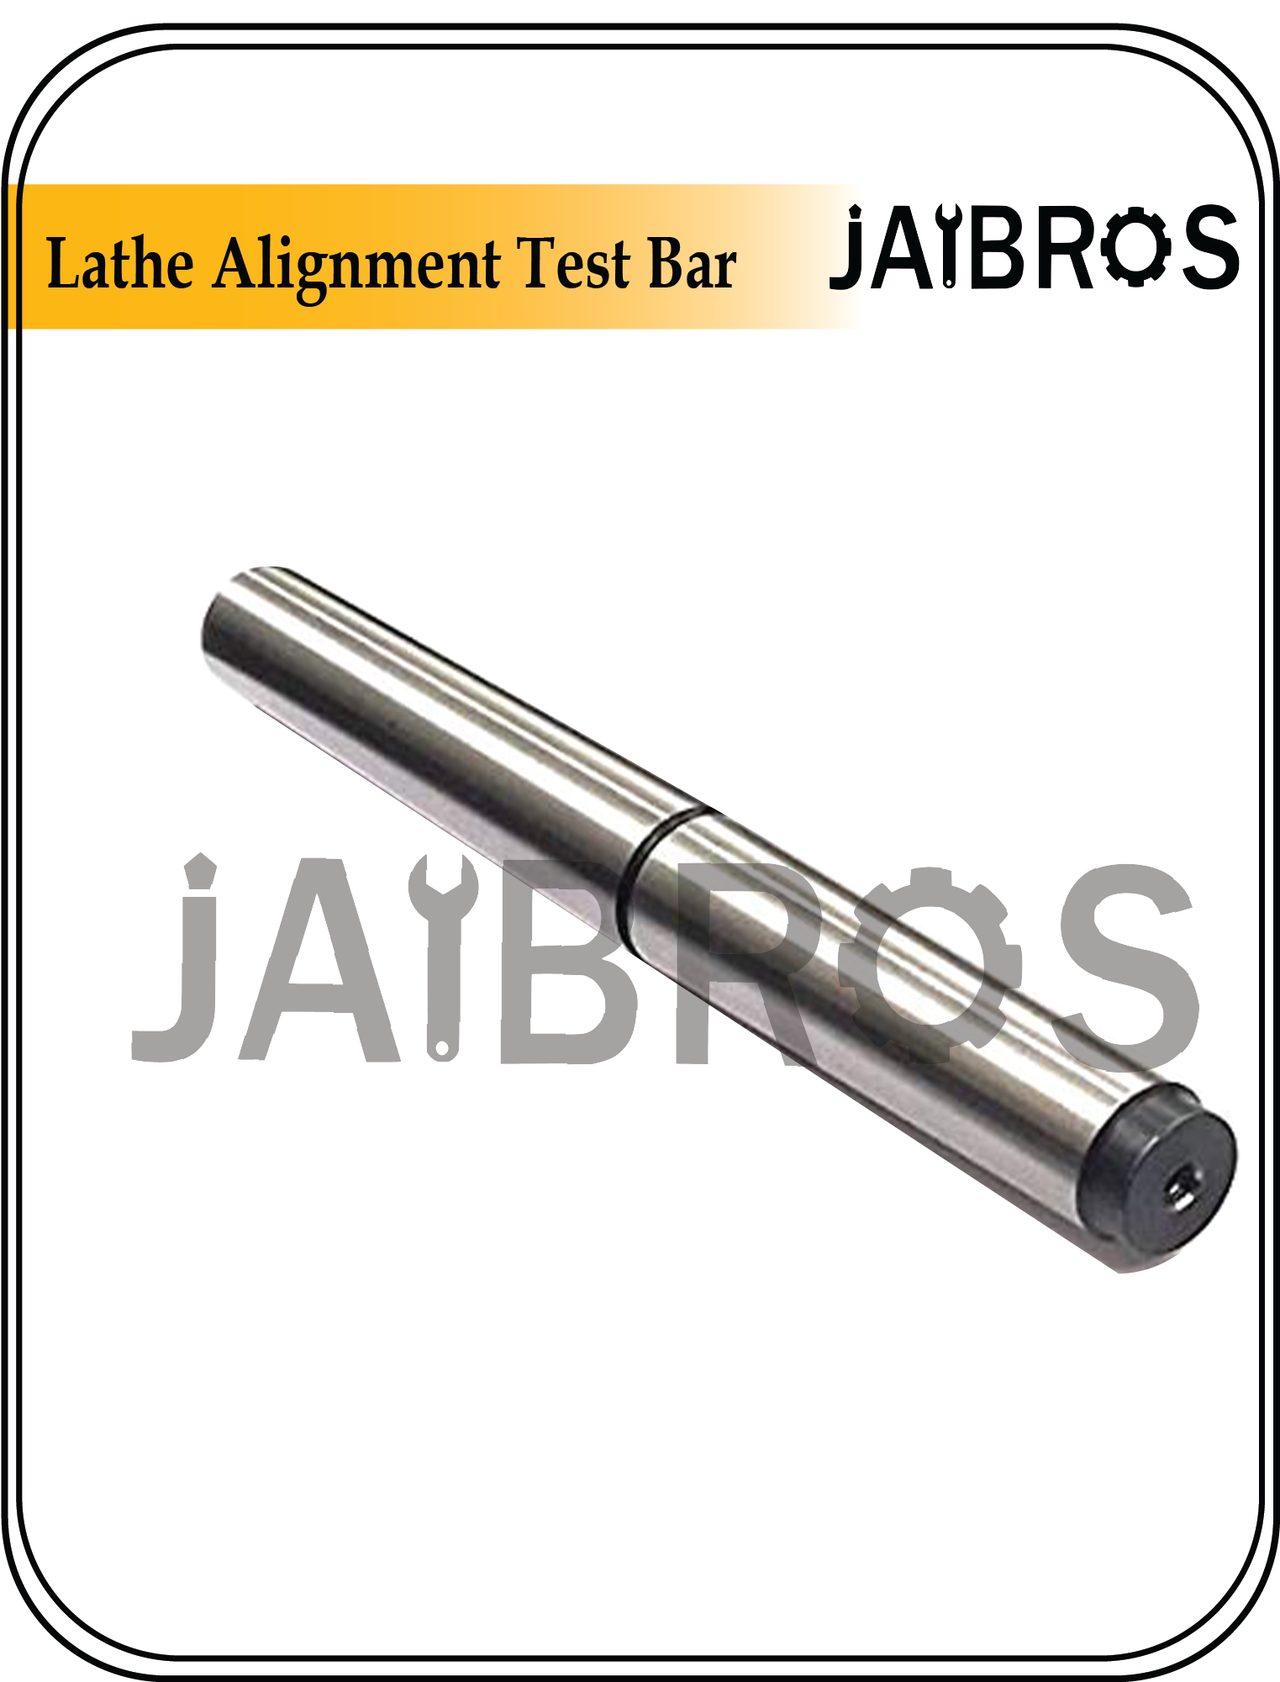 Lathe Alignment Test Bar